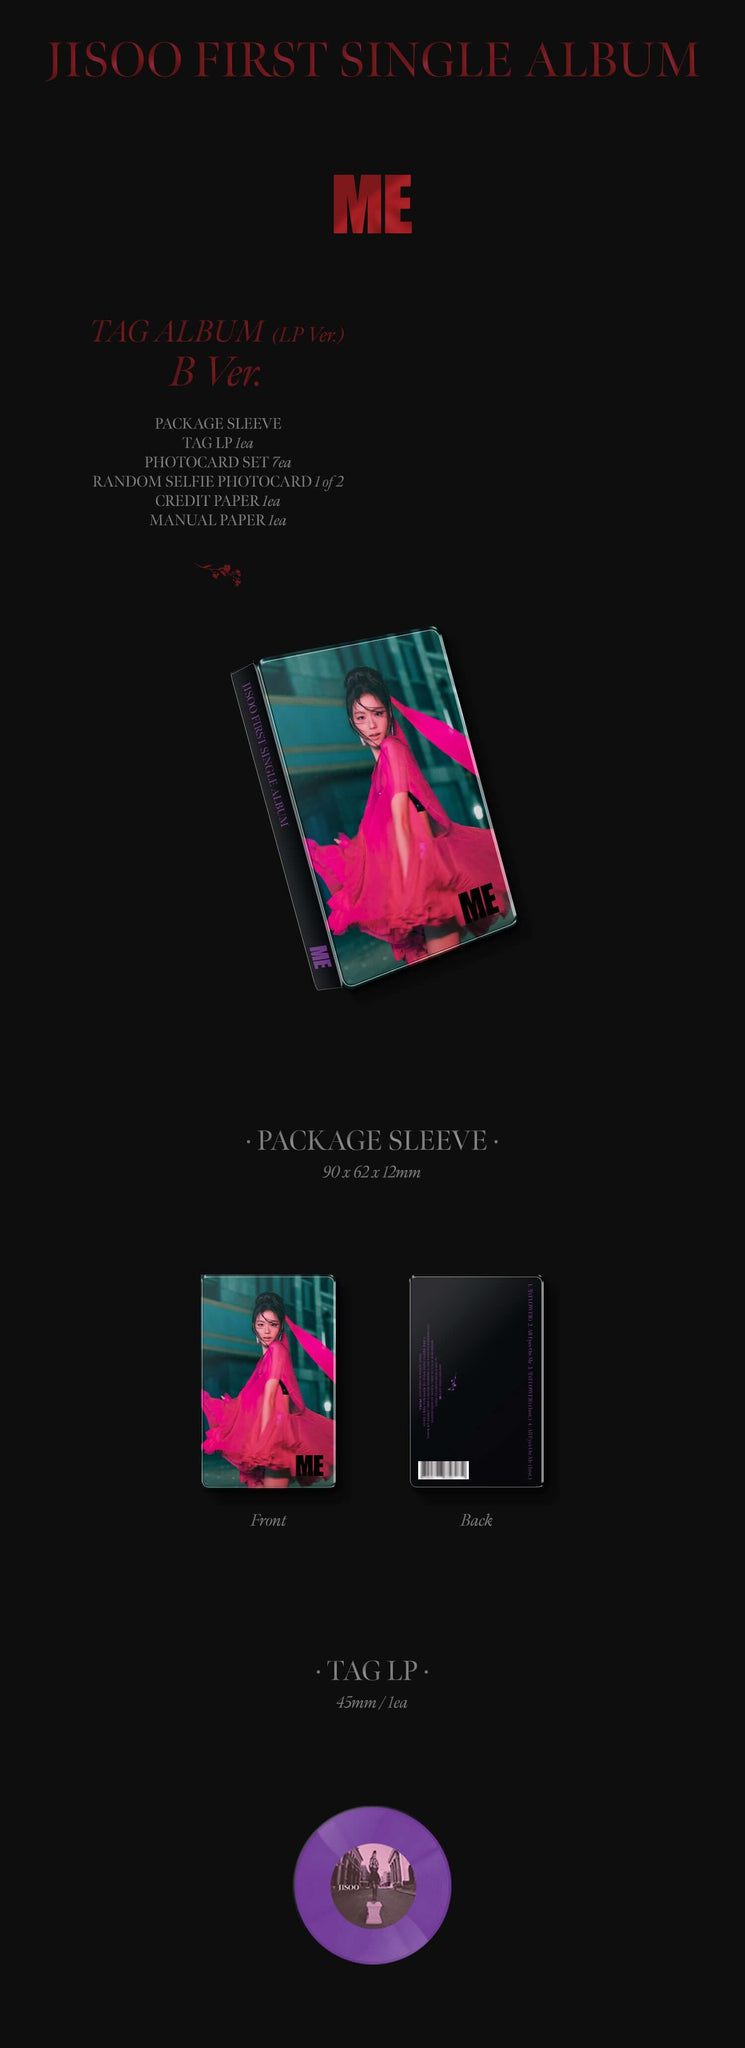 Jisoo ME (YG TAG Album) (LP Ver.) B Version Inclusions Package Sleeve Tag LP